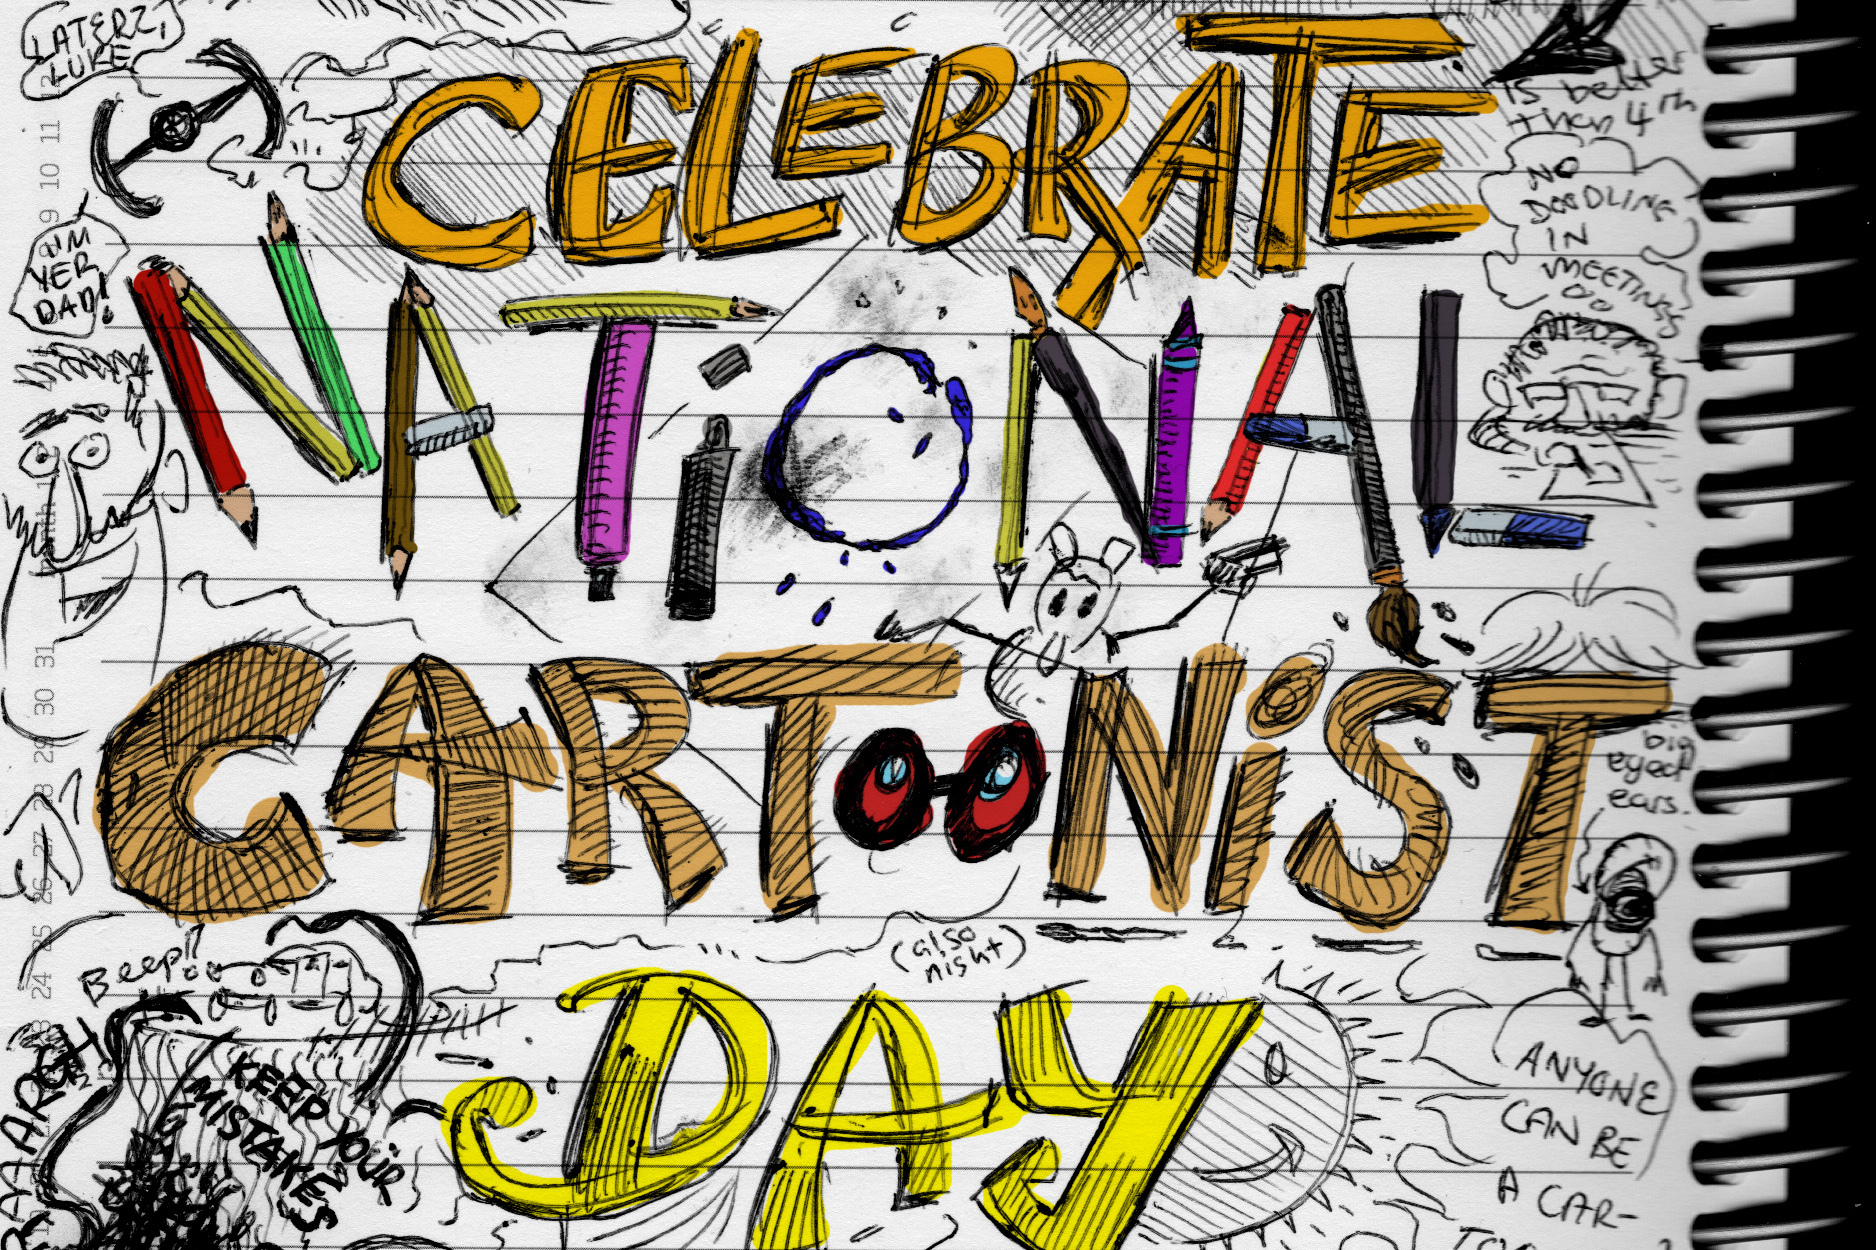 Celebrating National Cartoonist Day